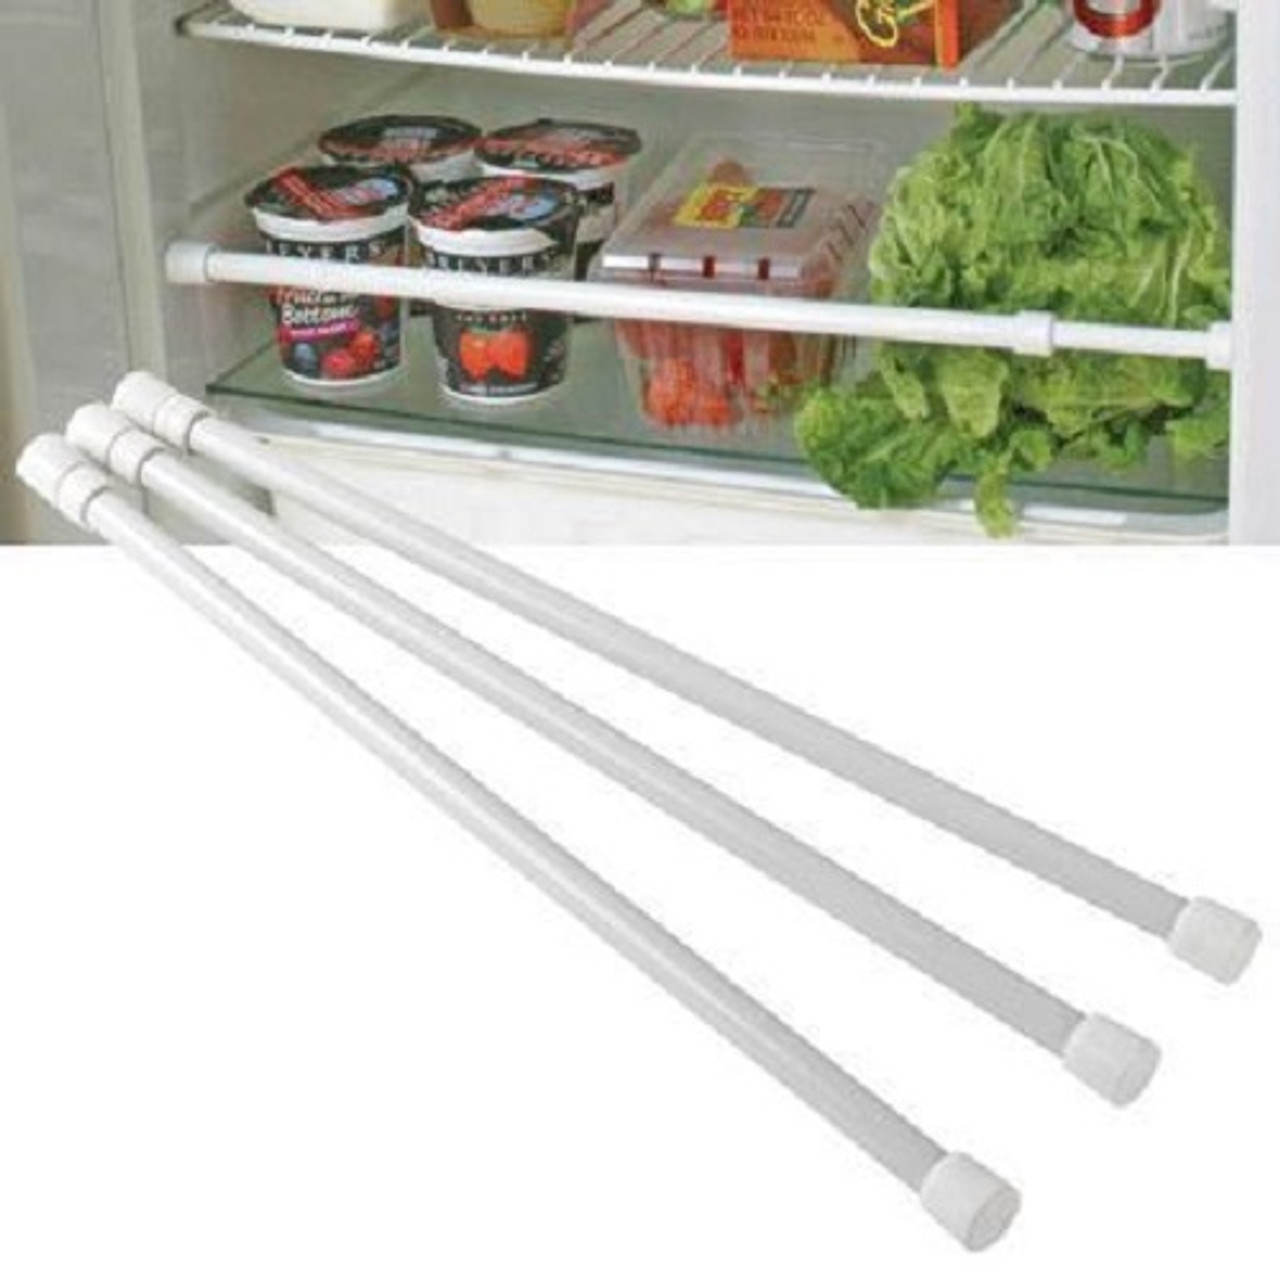 RV Refrigerator Bars in White (3-Pack) -(03-1011)  BARS SHOWN, EXAMPLE OF INSTALLATION IN FRIDGE